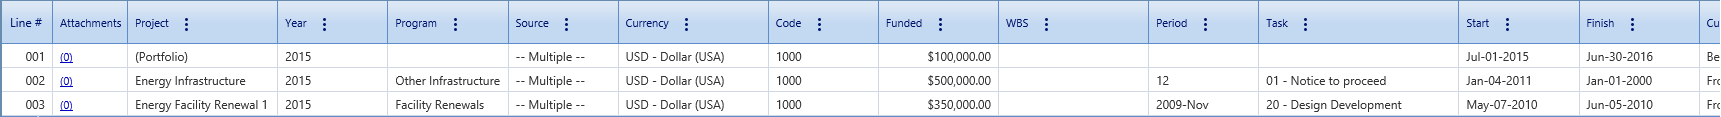 4. Funding Records Details Tab Toolbar